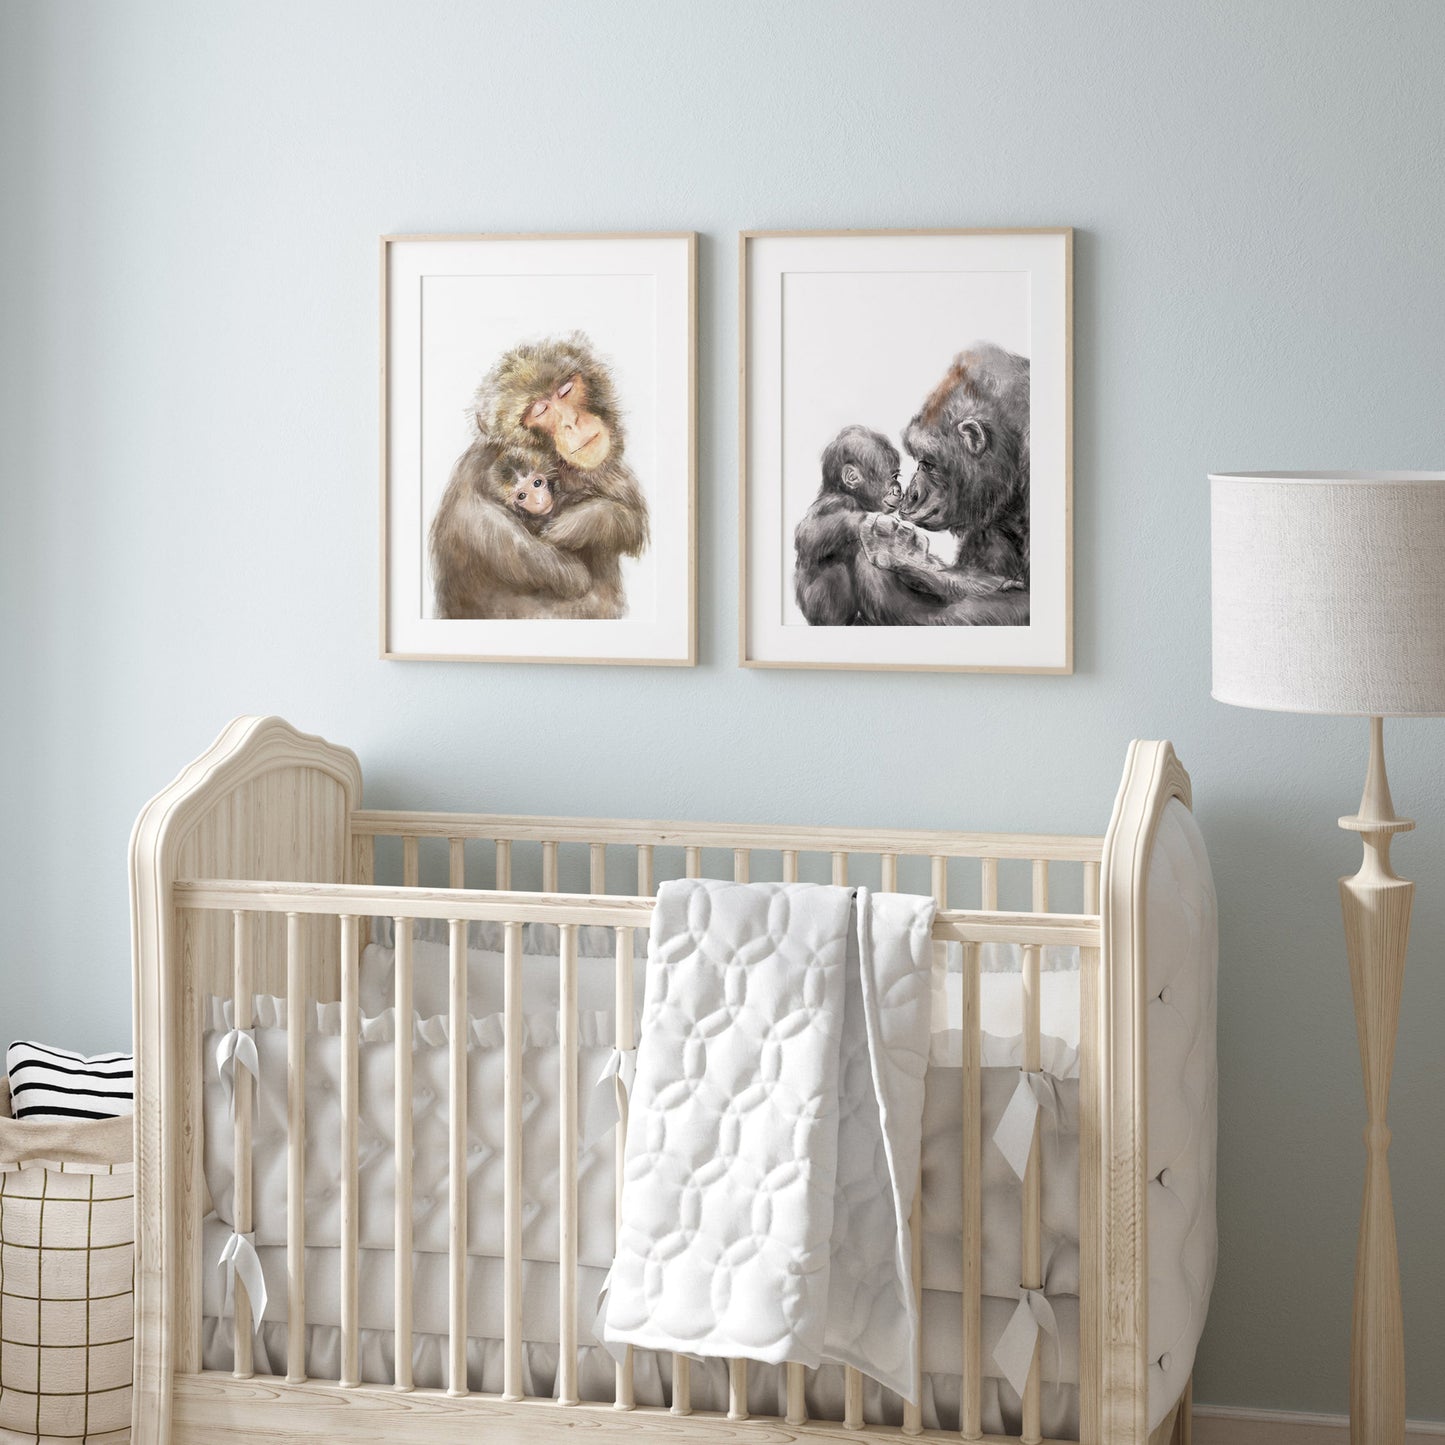 Baby Gorilla and Mom Art Print